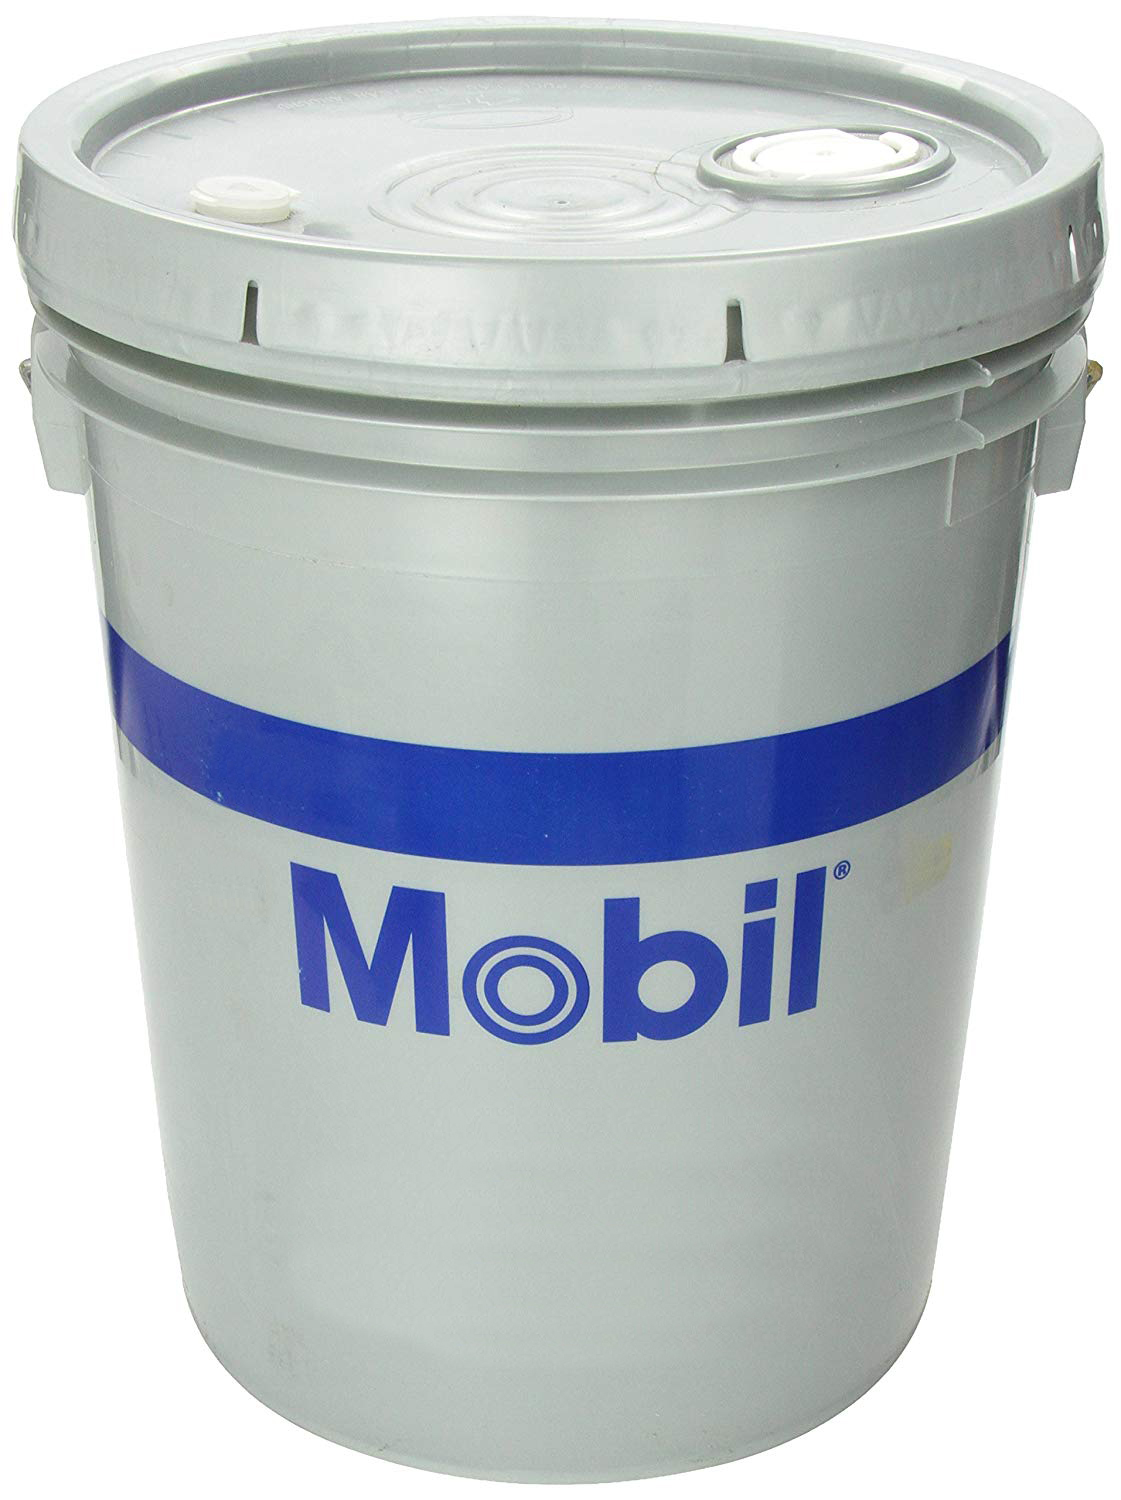 MOBIL SHC RARUS-32 (ISO-32, PAO SYNTHETIC SCREW COMPRESSOR OIL) SILVER PAIL, 1/5 (REPLACES RARUS SHC 1024) - 5 Gallon Pail